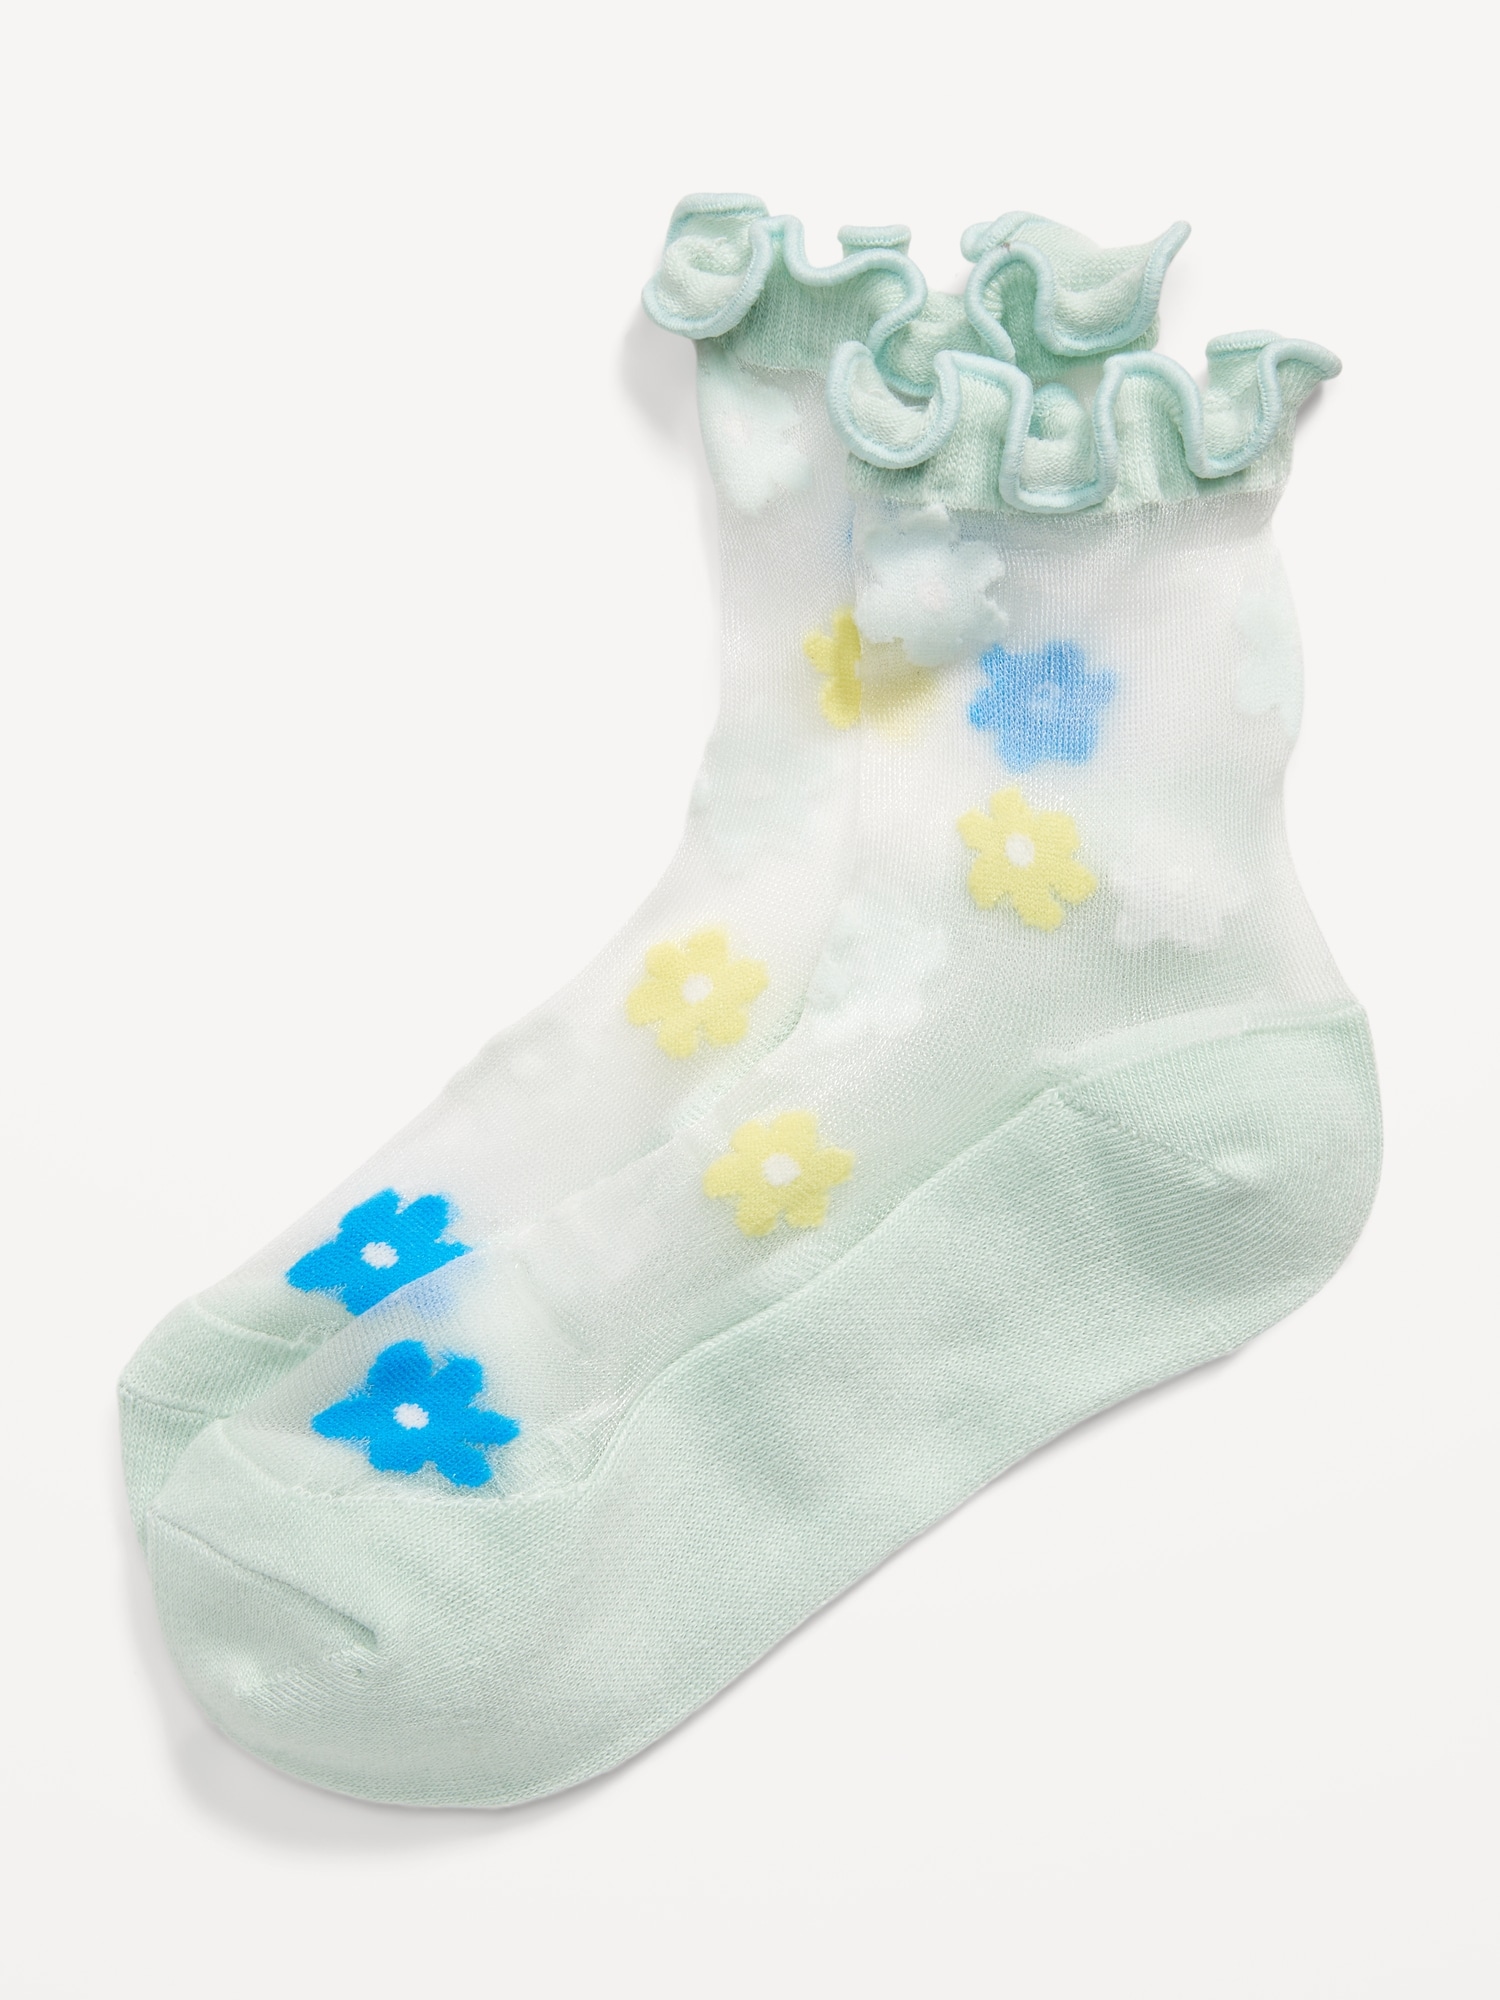 Printed Ruffle-Cuff Quarter-Crew Socks for Girls